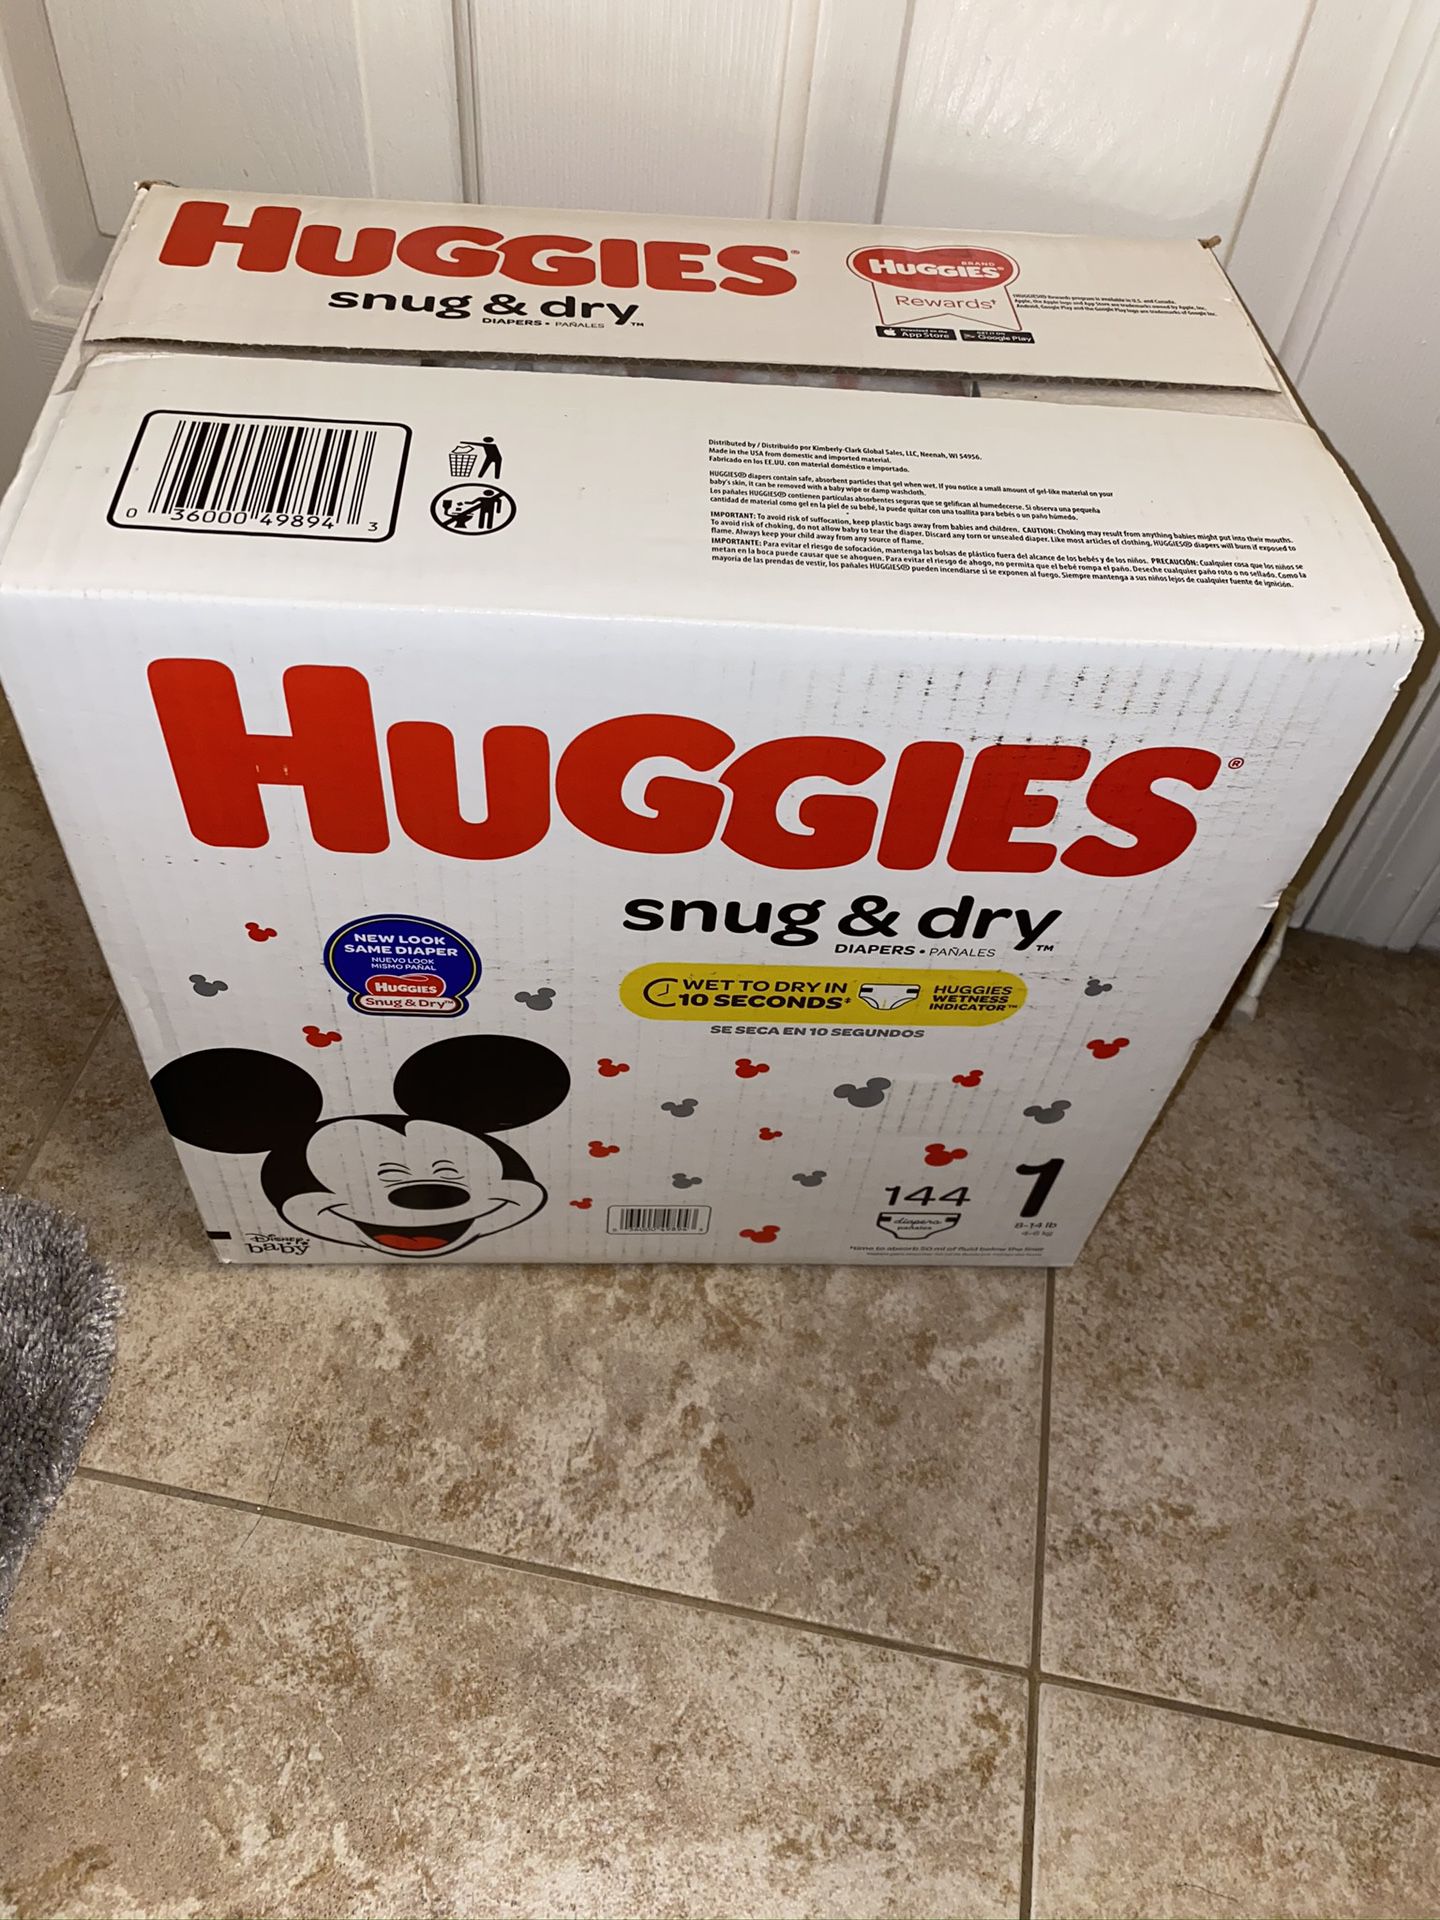 Huggies size 1